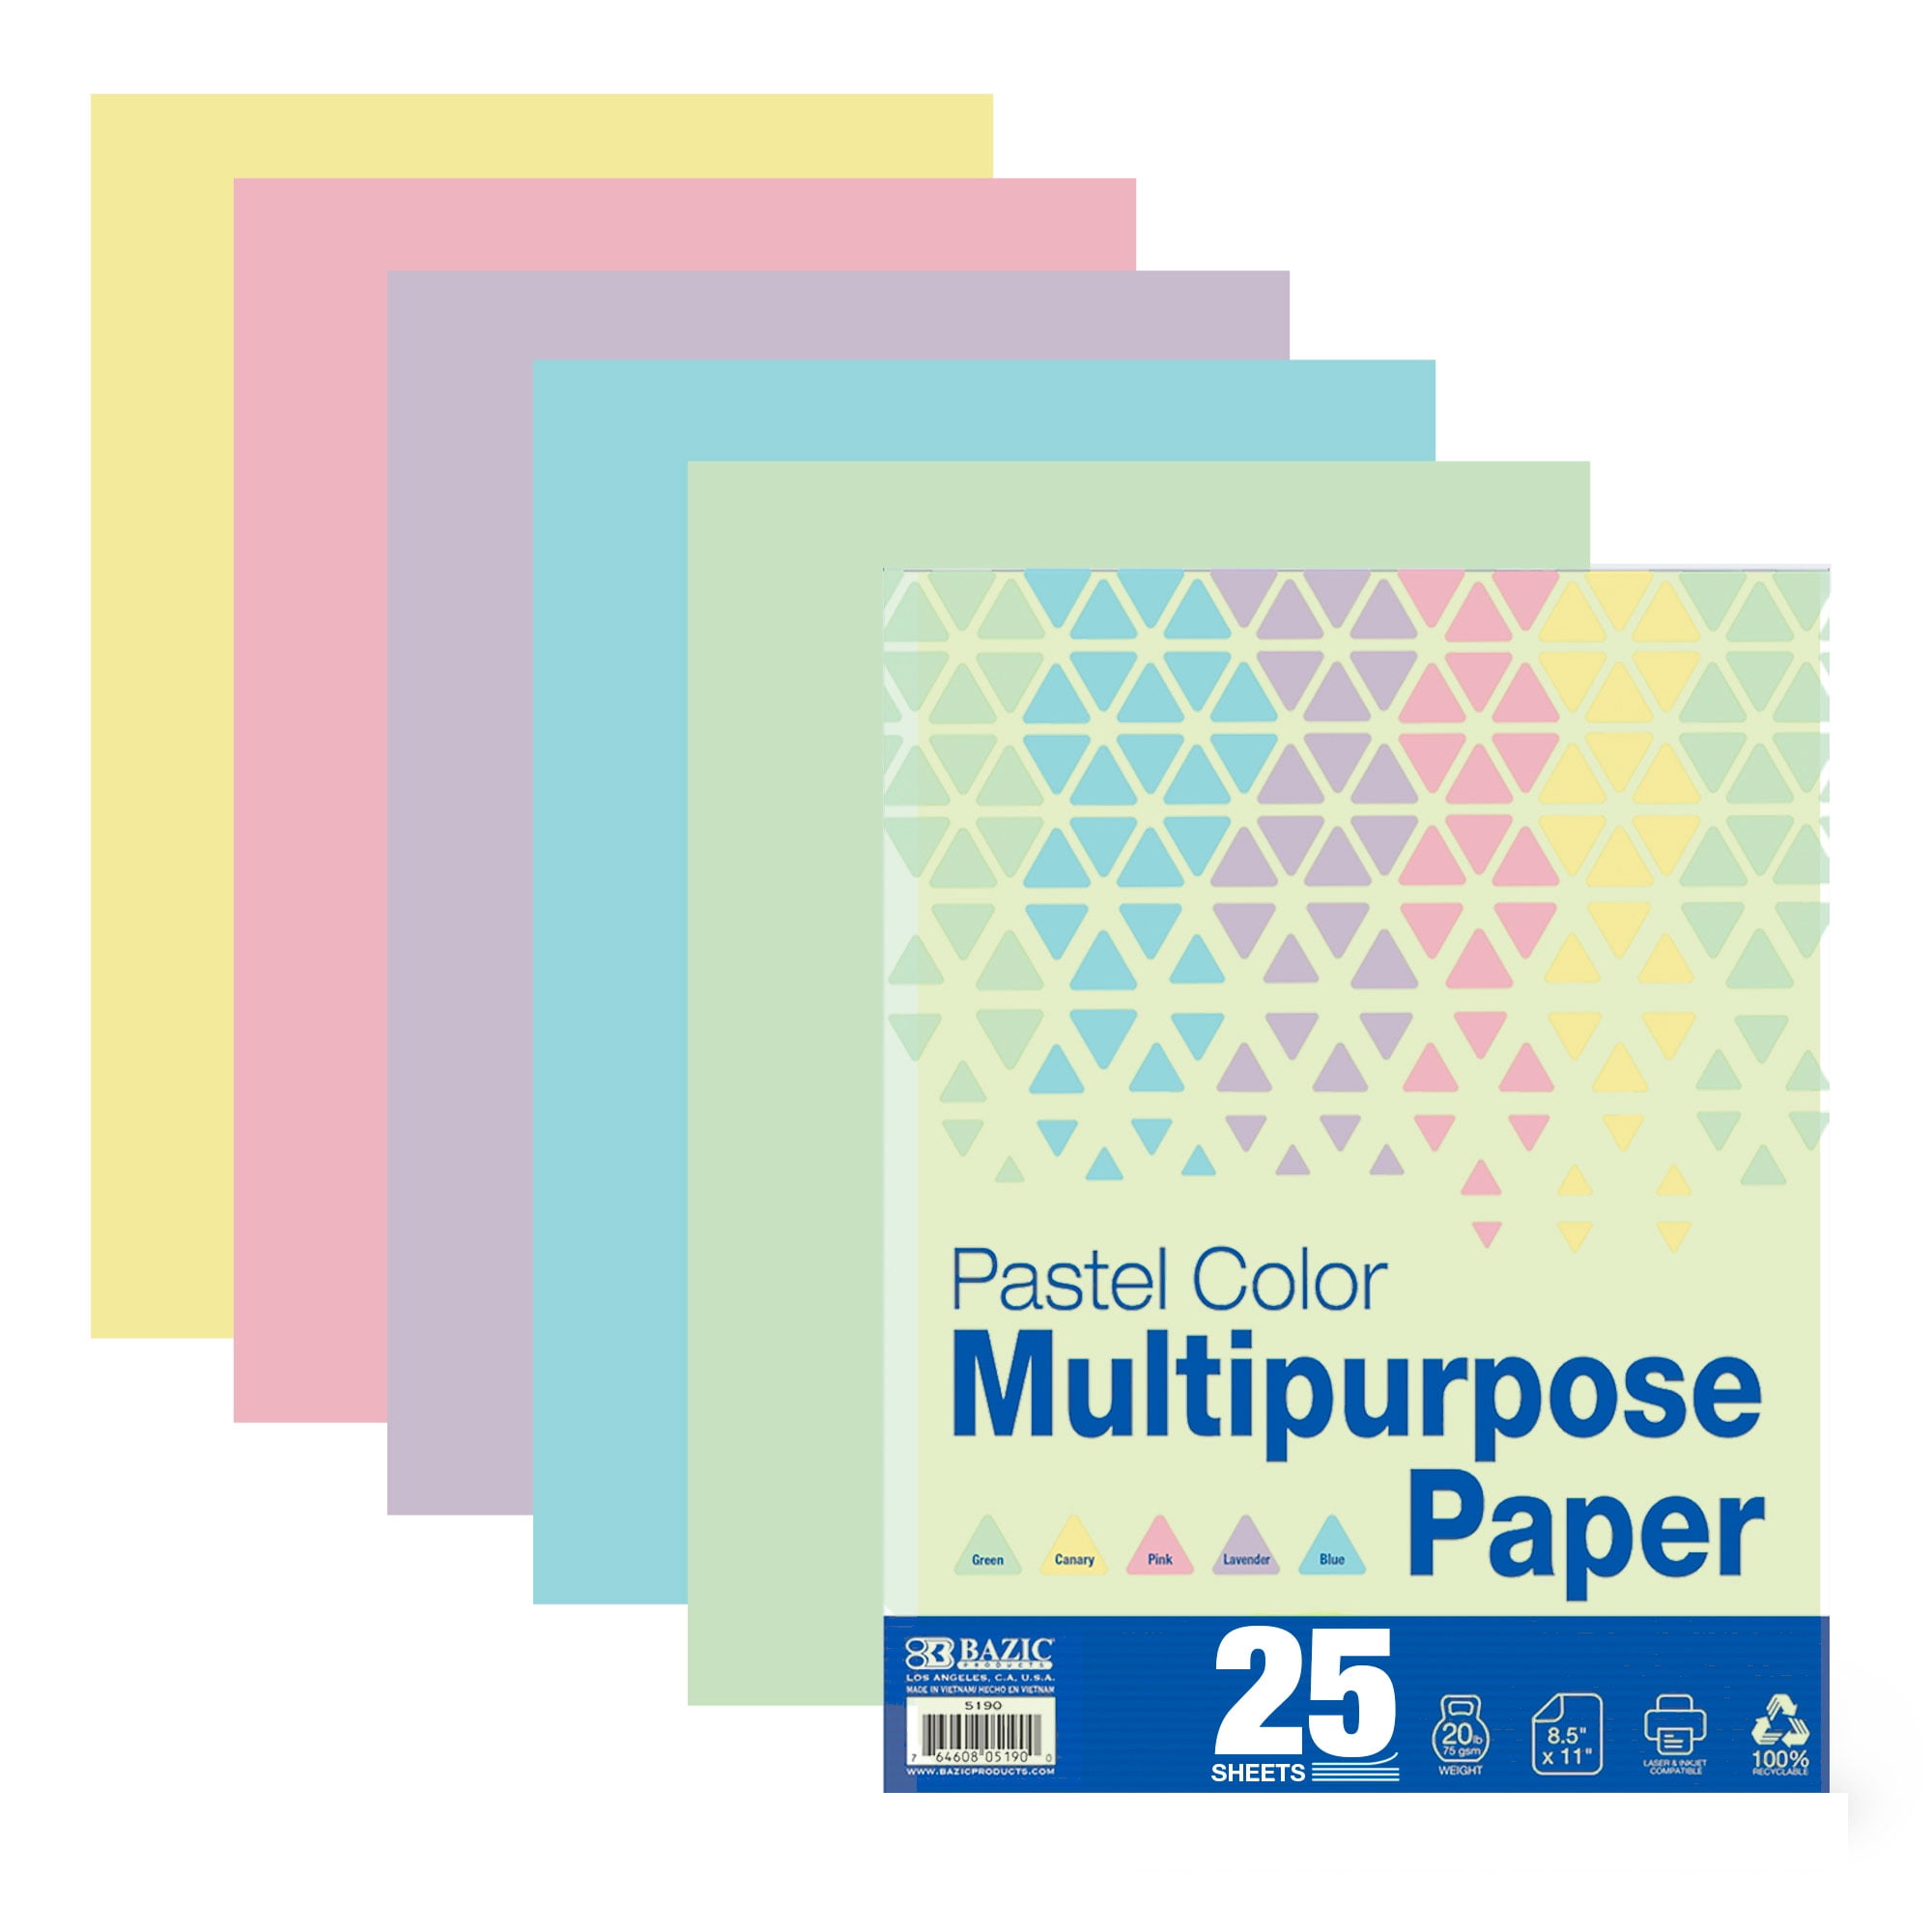 BAZIC 25 Sheets Pastel Color Multipurpose Paper 8.5x11, Colored